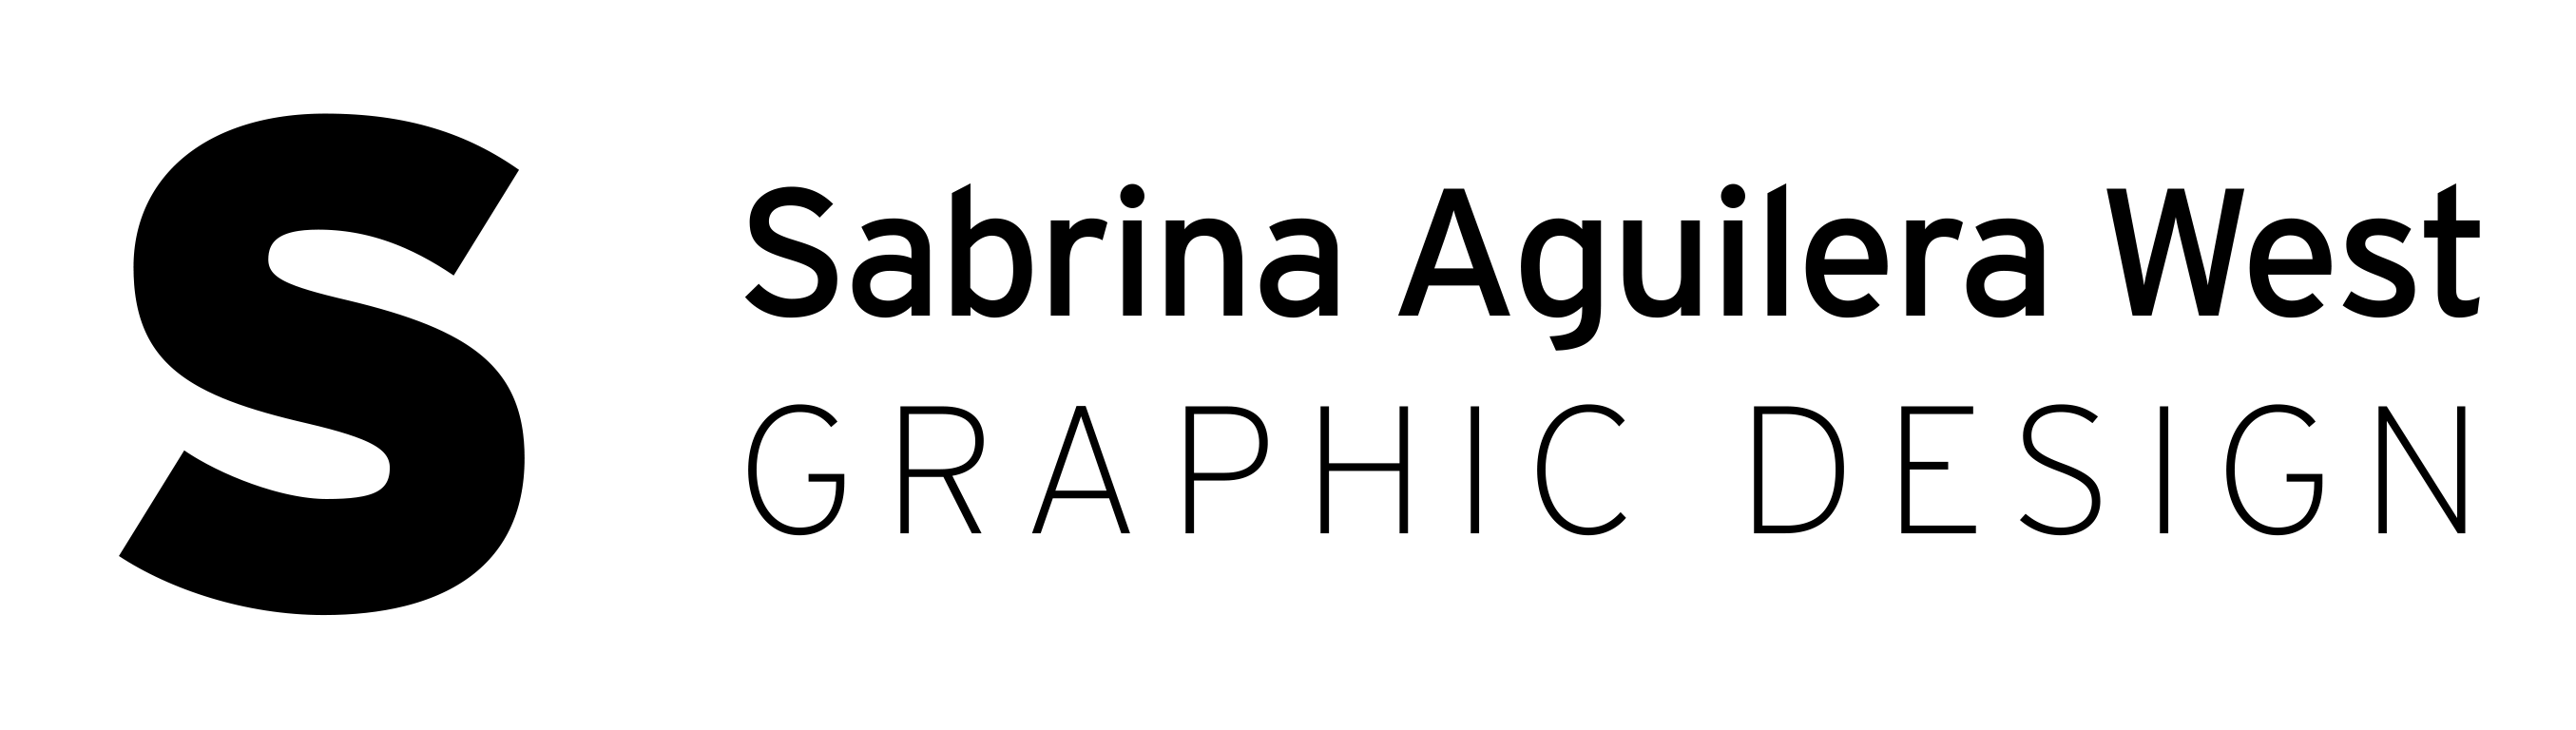 Sabrina Aguilera West